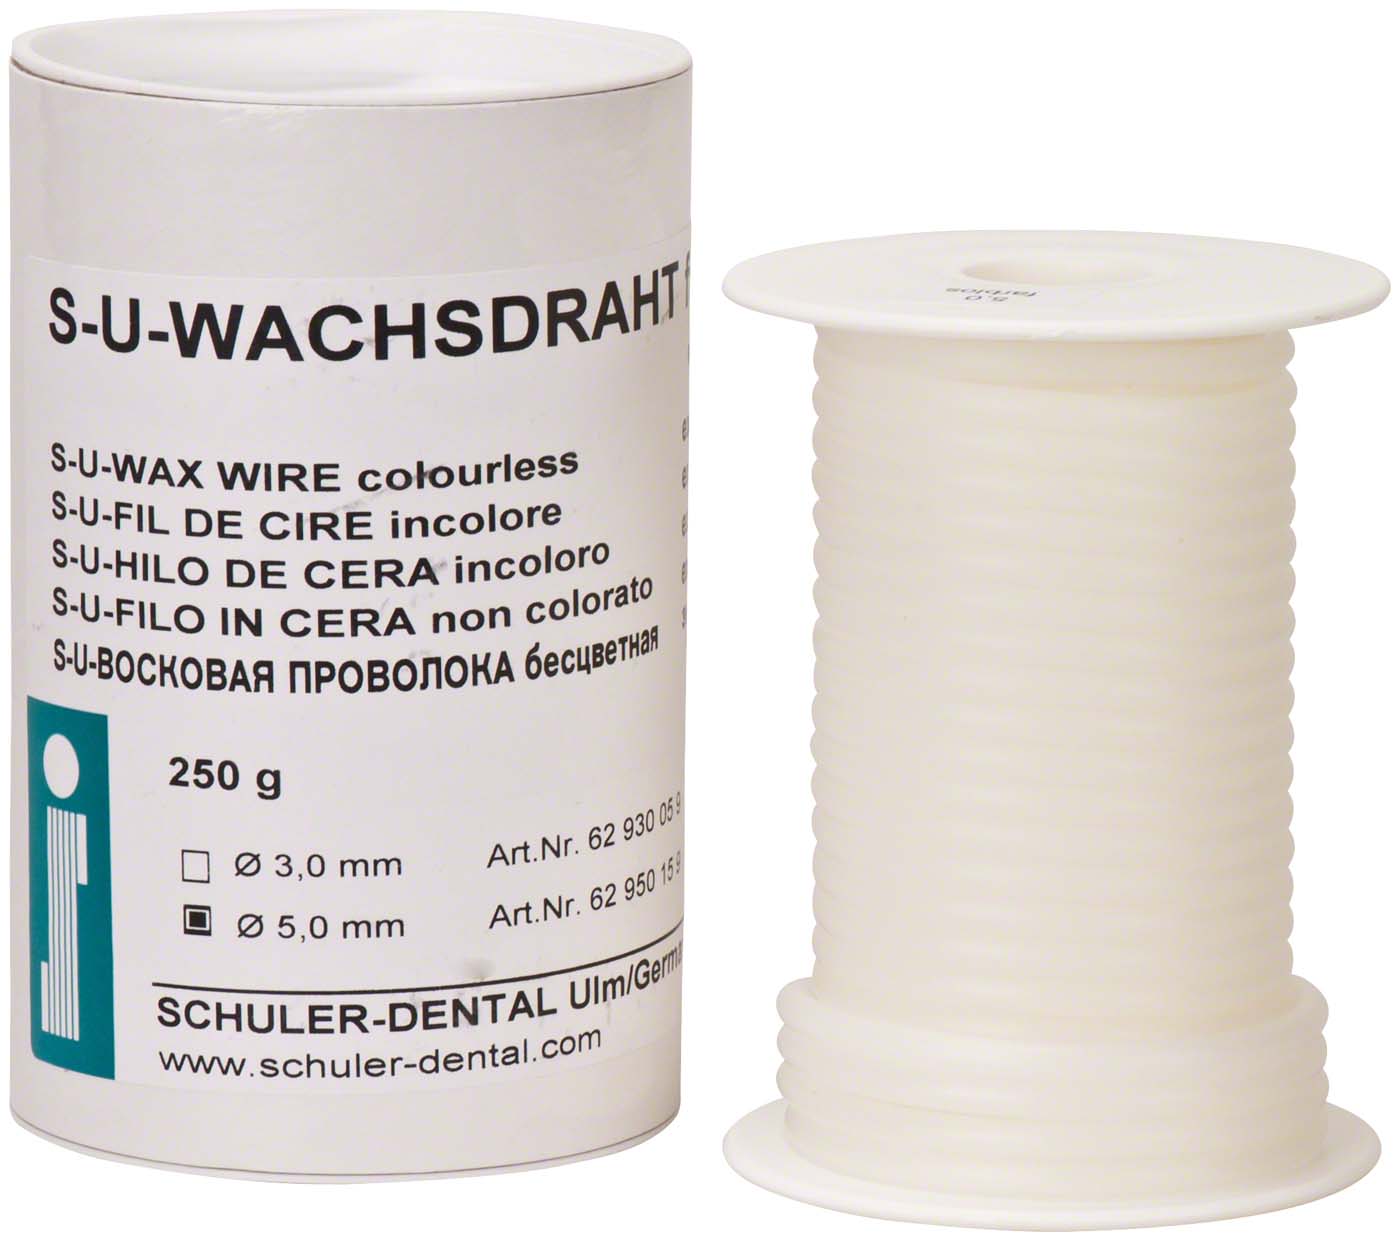 S-U-WACHSDRAHT extra weich SCHULER-DENTAL